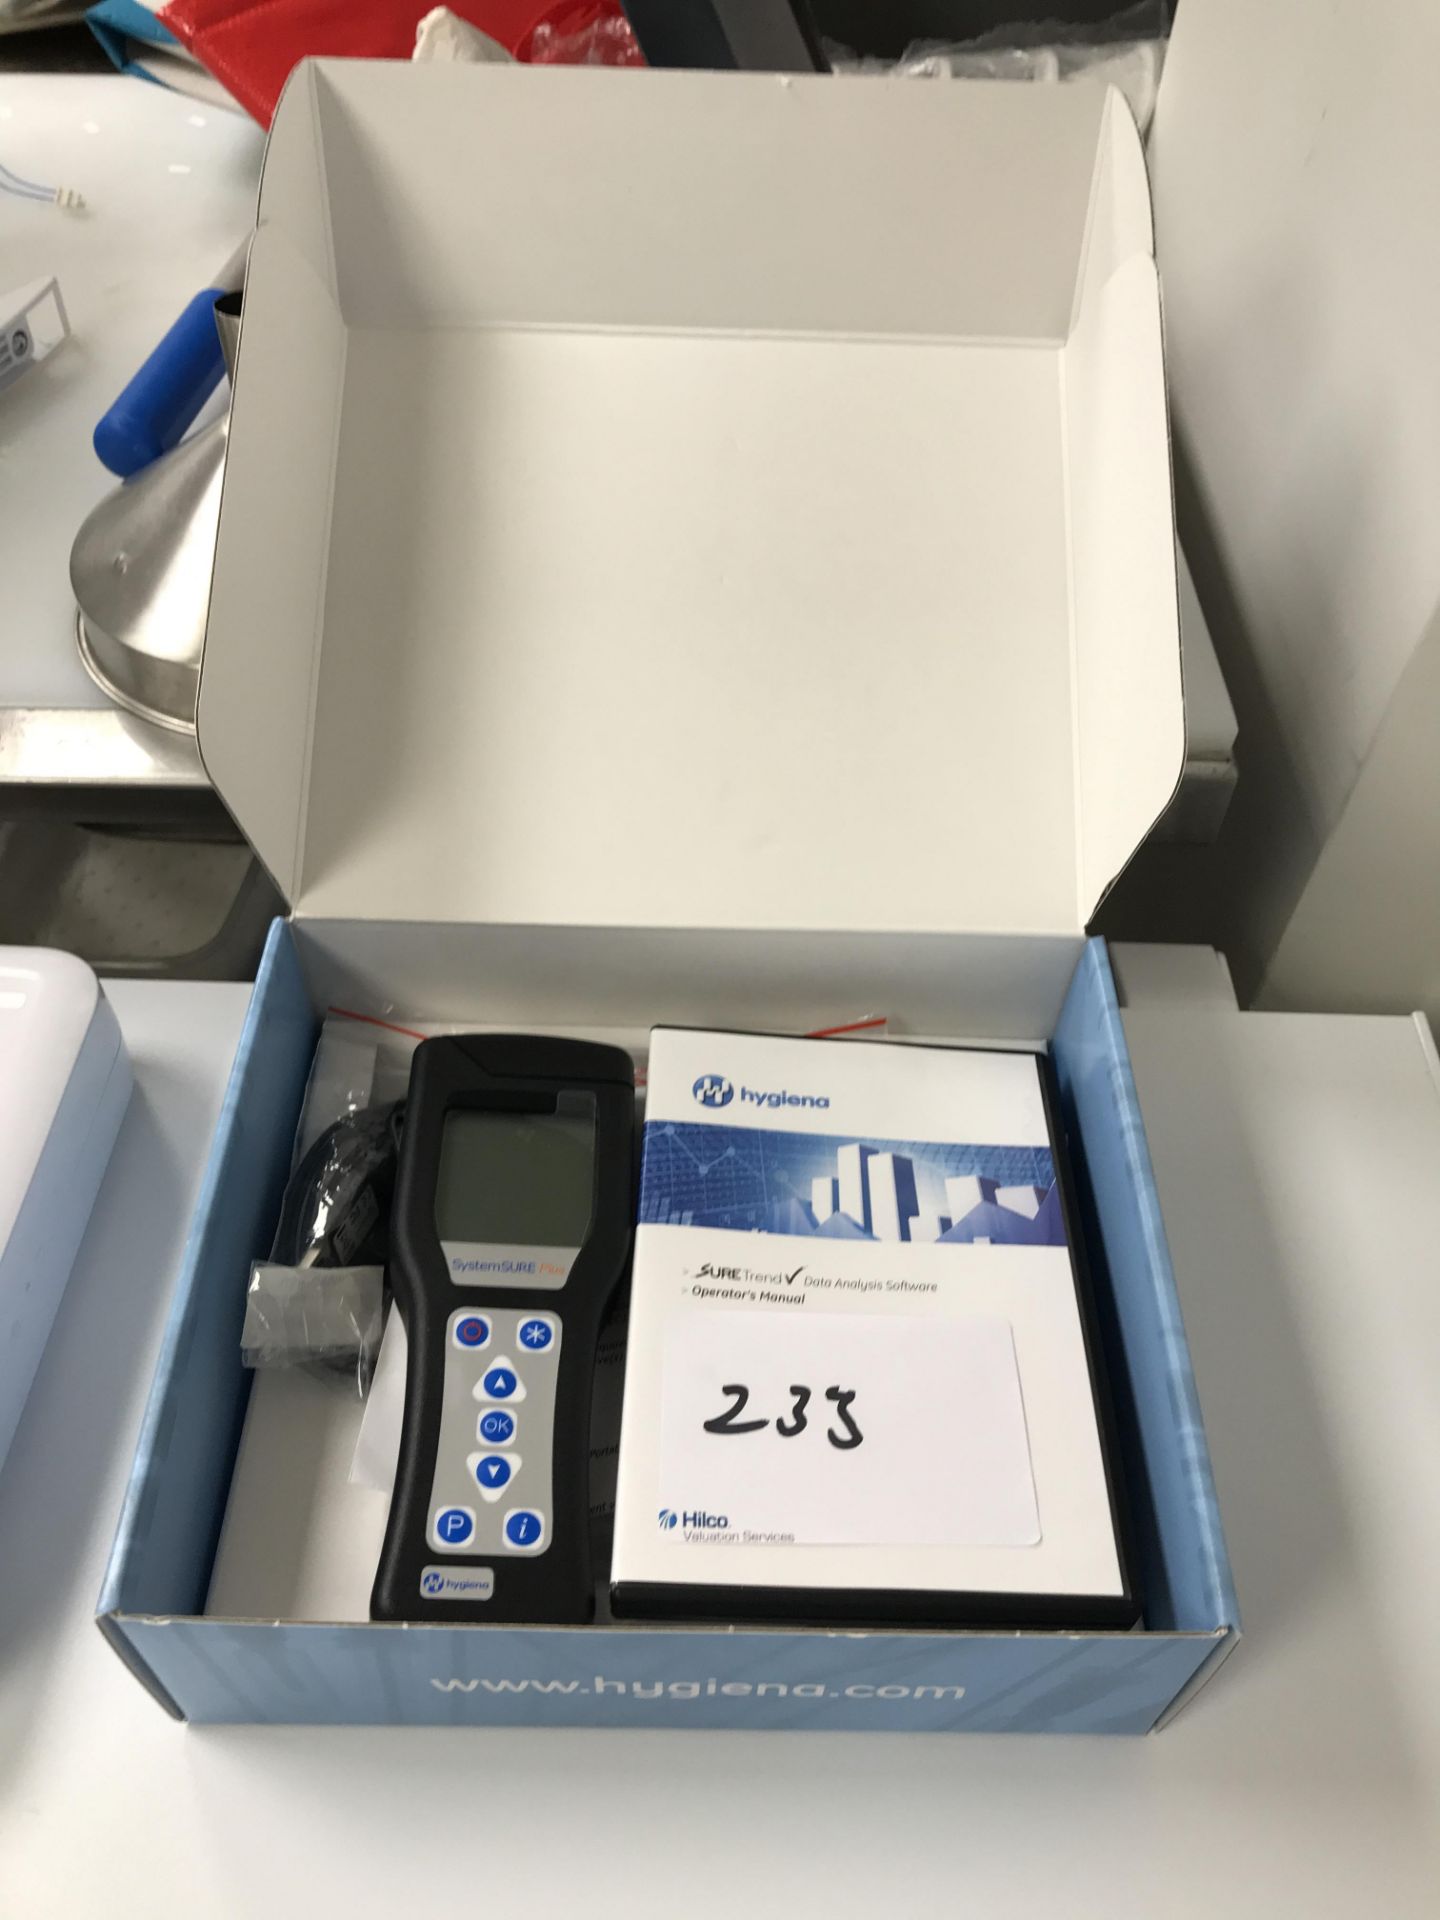 1, Hygiena Systemsure PLUS V2 Portable Palm-Sized Luminometer. Serial No. 118228